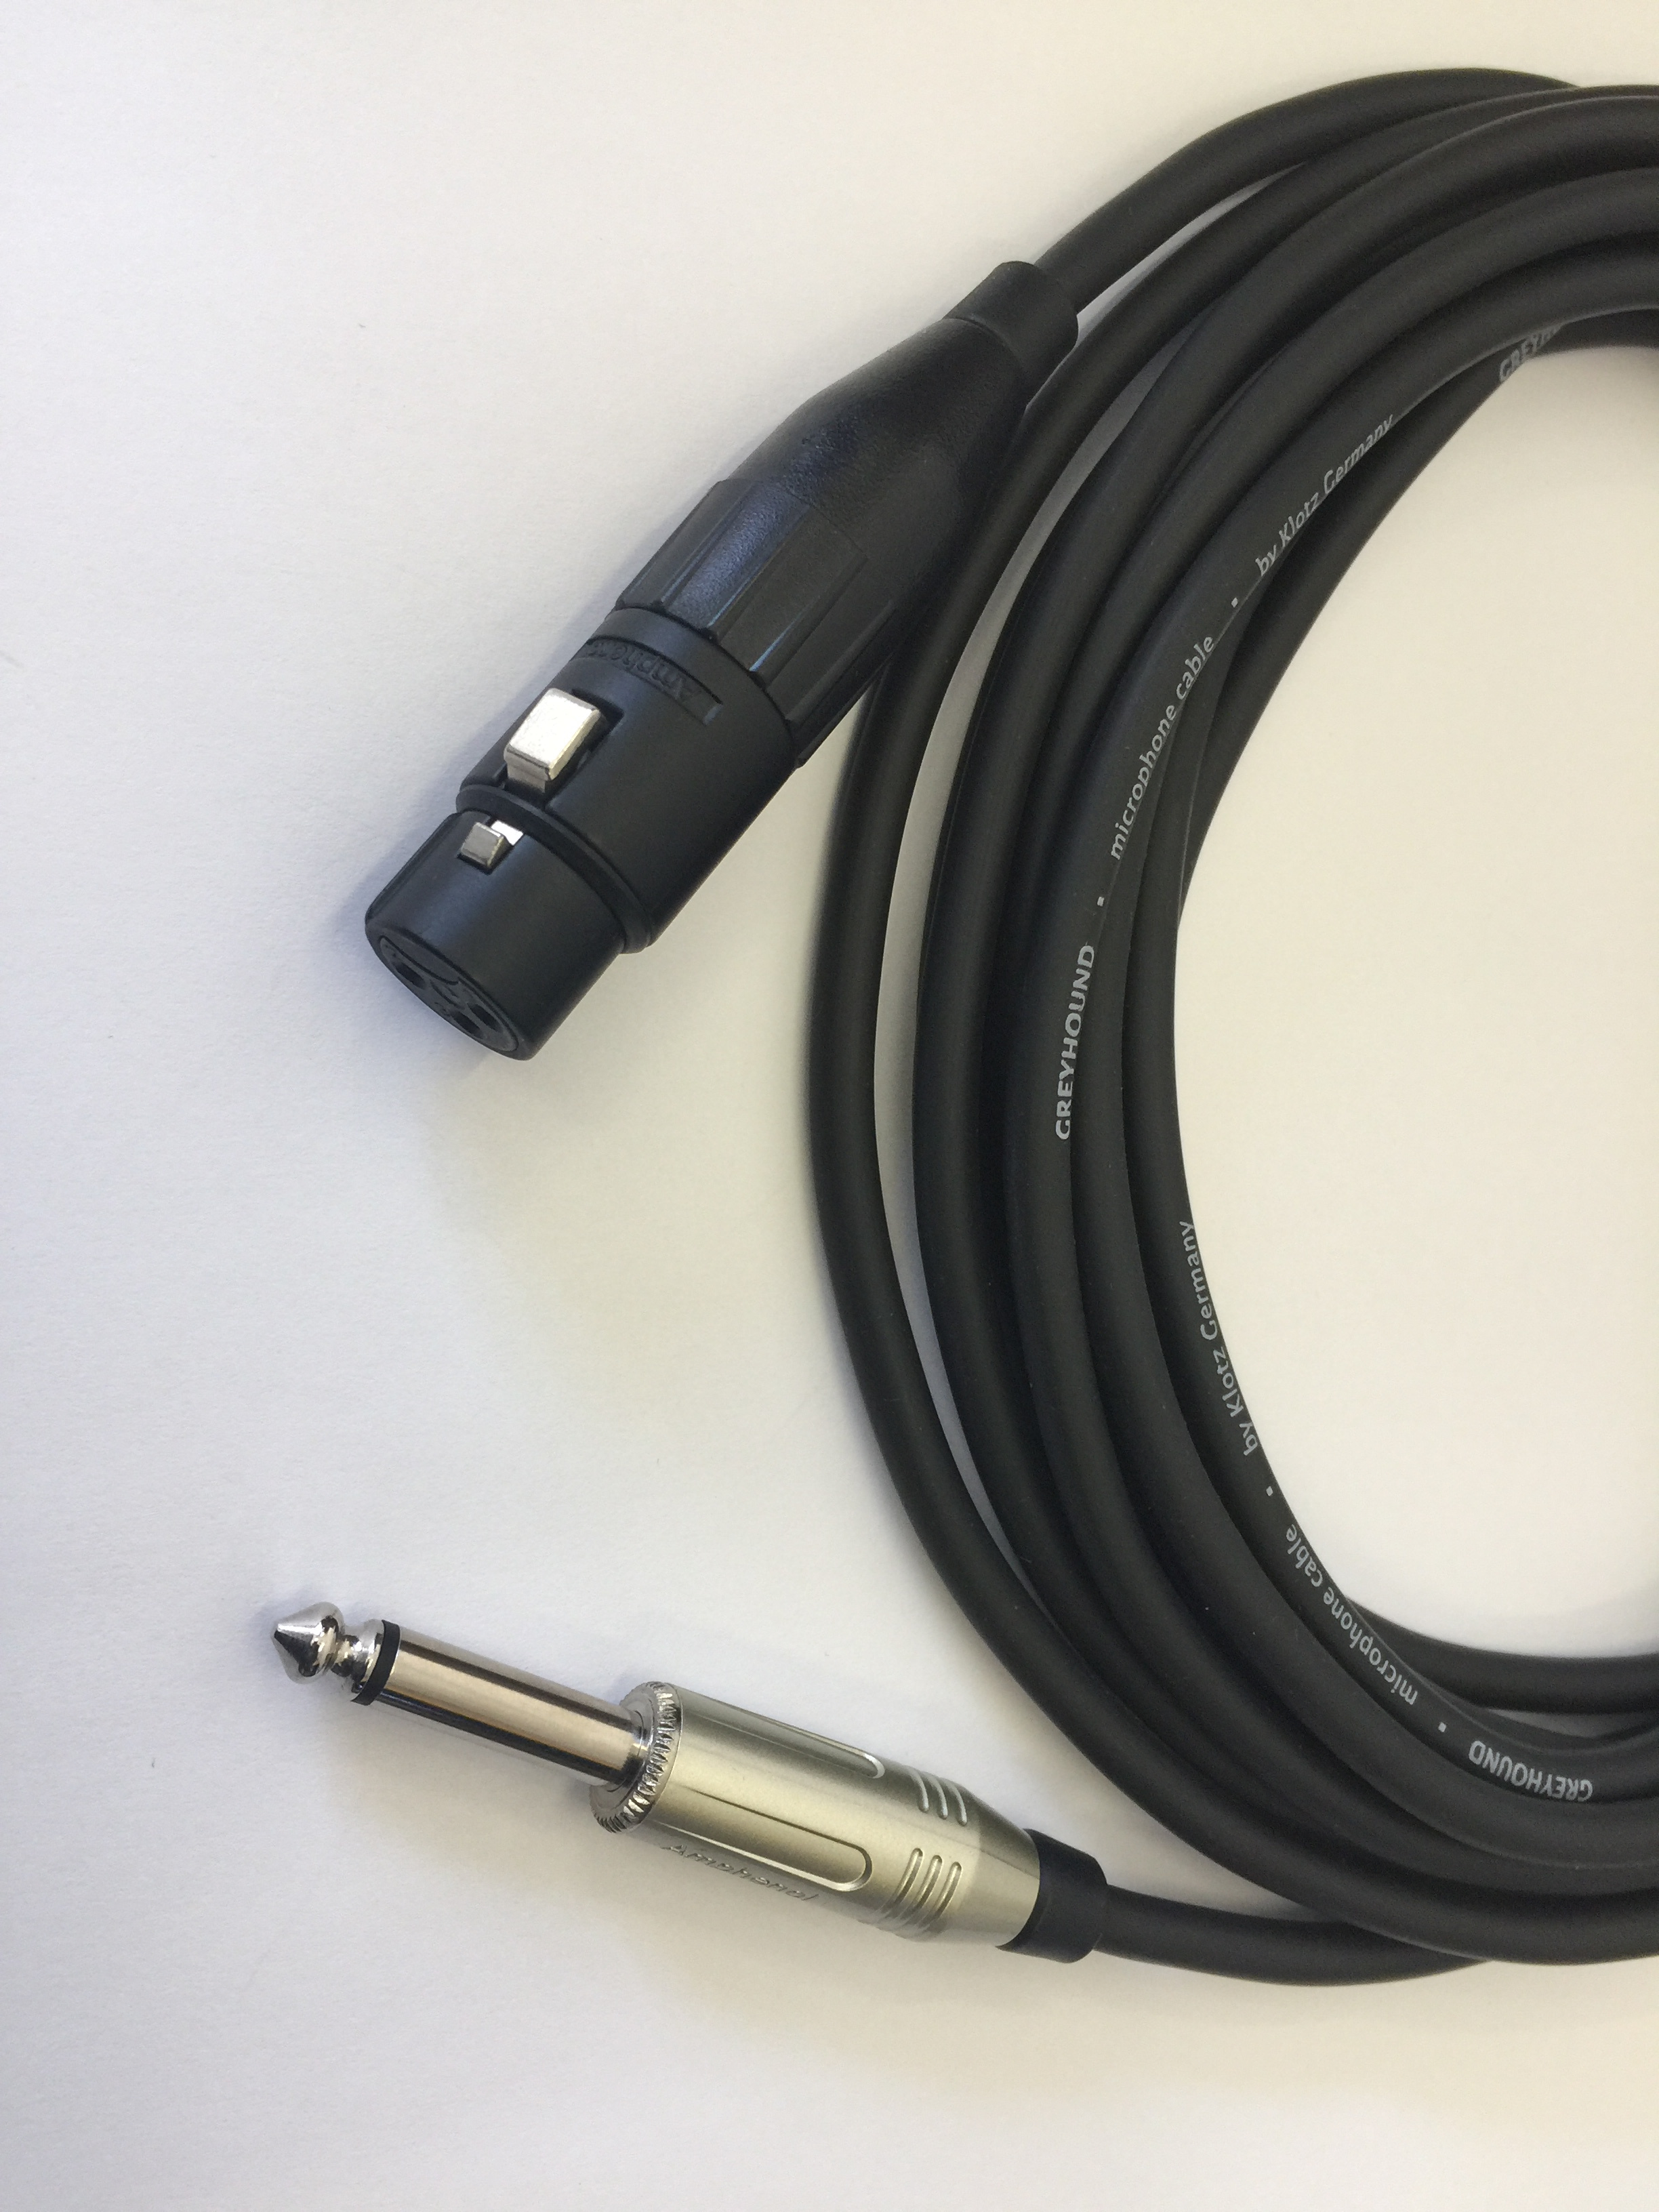 KLOTZ GRHXP050 GREYHOUND готовый микрофонный кабель, разъемы Amphenol XLR female/Jack mono длина 5m